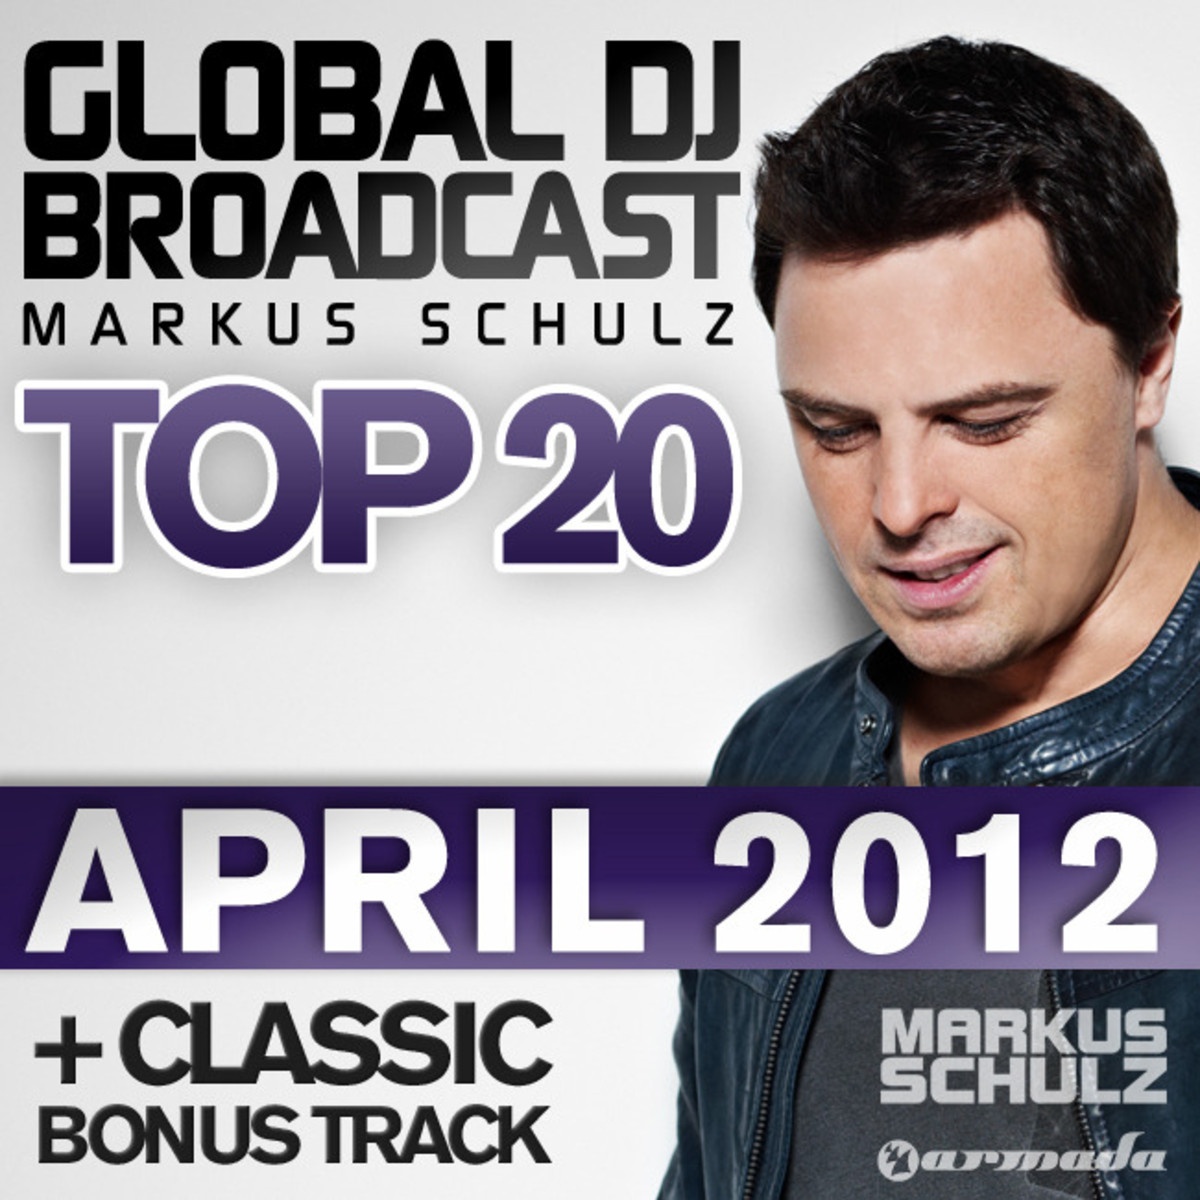 Global DJ Broadcast Top 20 - April 2012